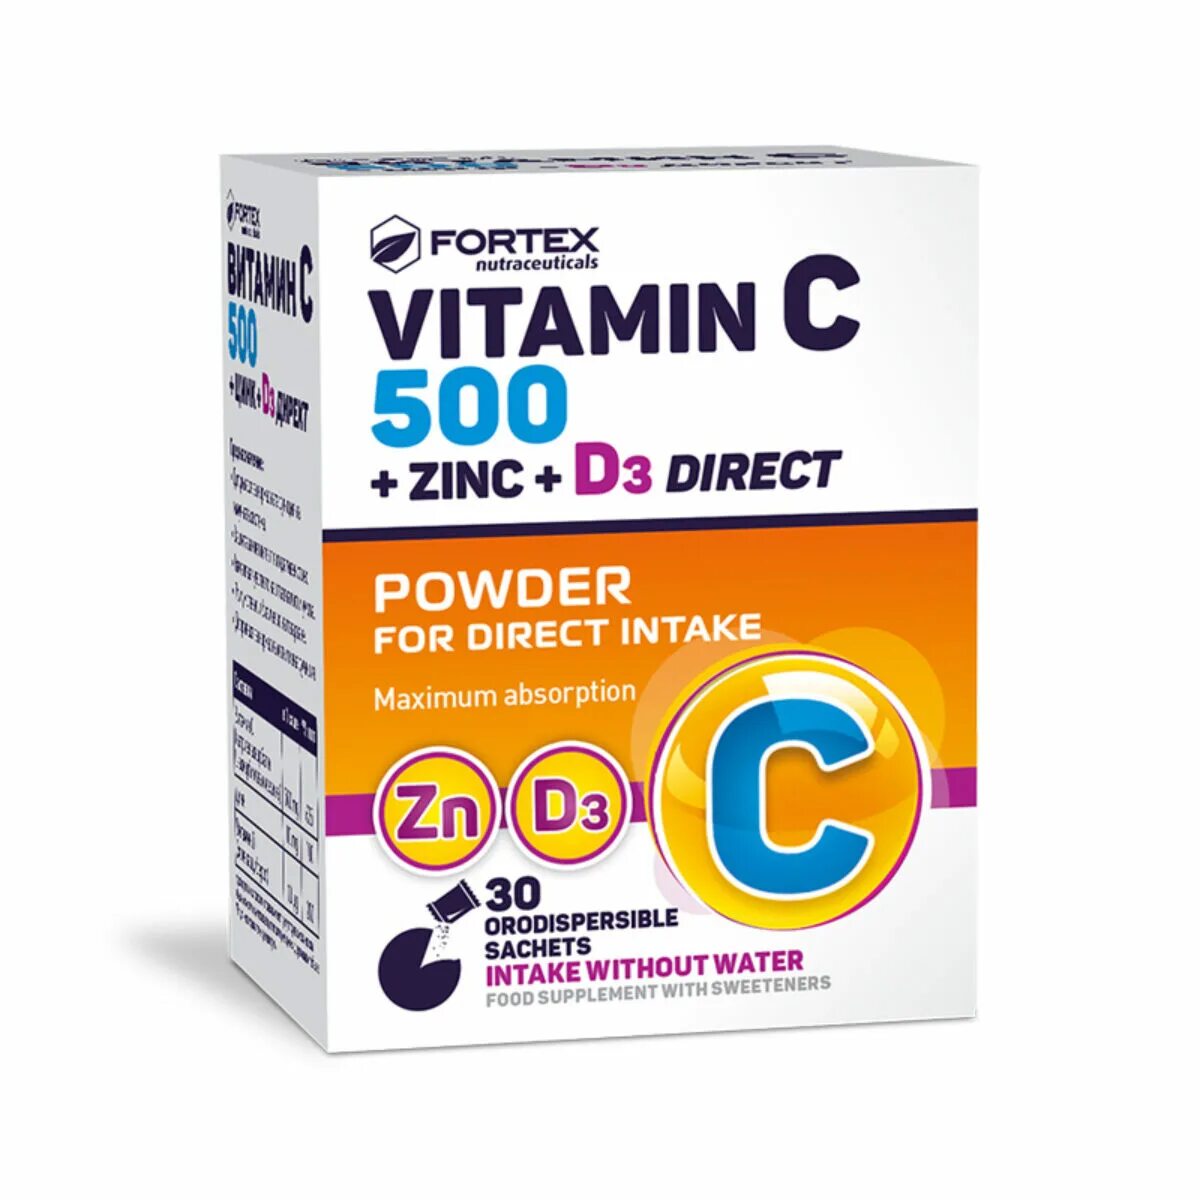 Vit c 5. Витамин д3 цинк и витамин с. Витамин с с цинком селеном и д3. Витамин д3 и цинк Эвалар и витамин с. Витамин д3 с цинком.